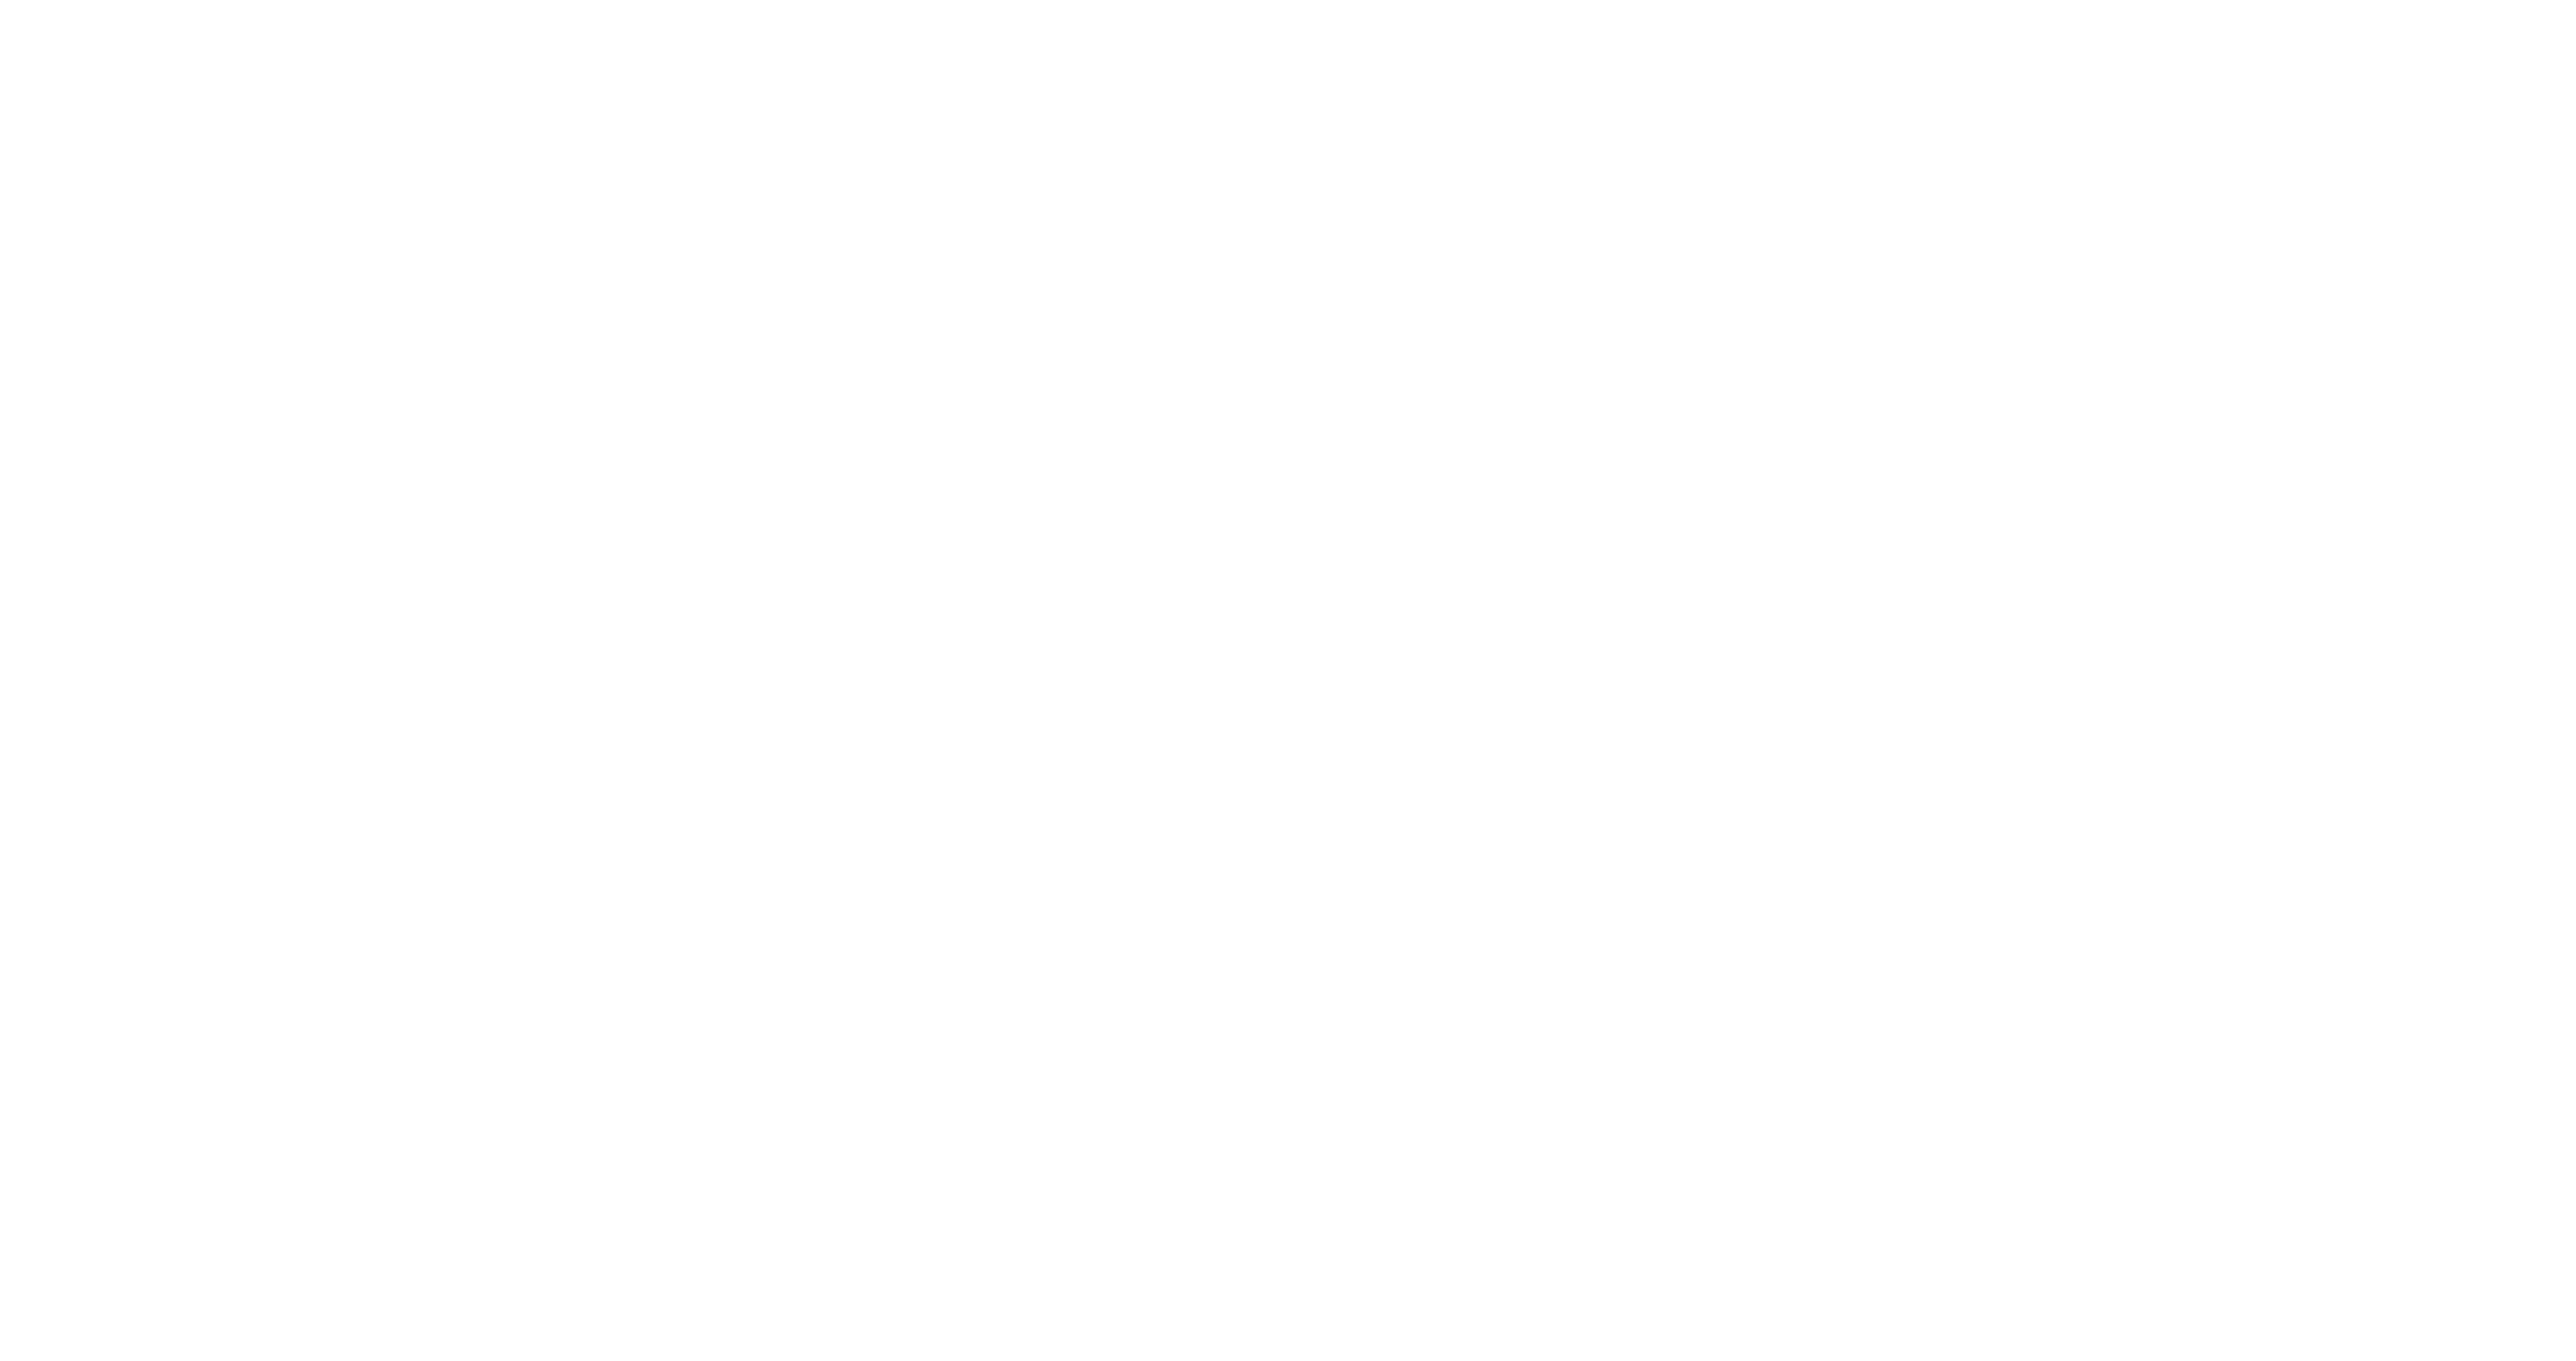 Elektra Fitness